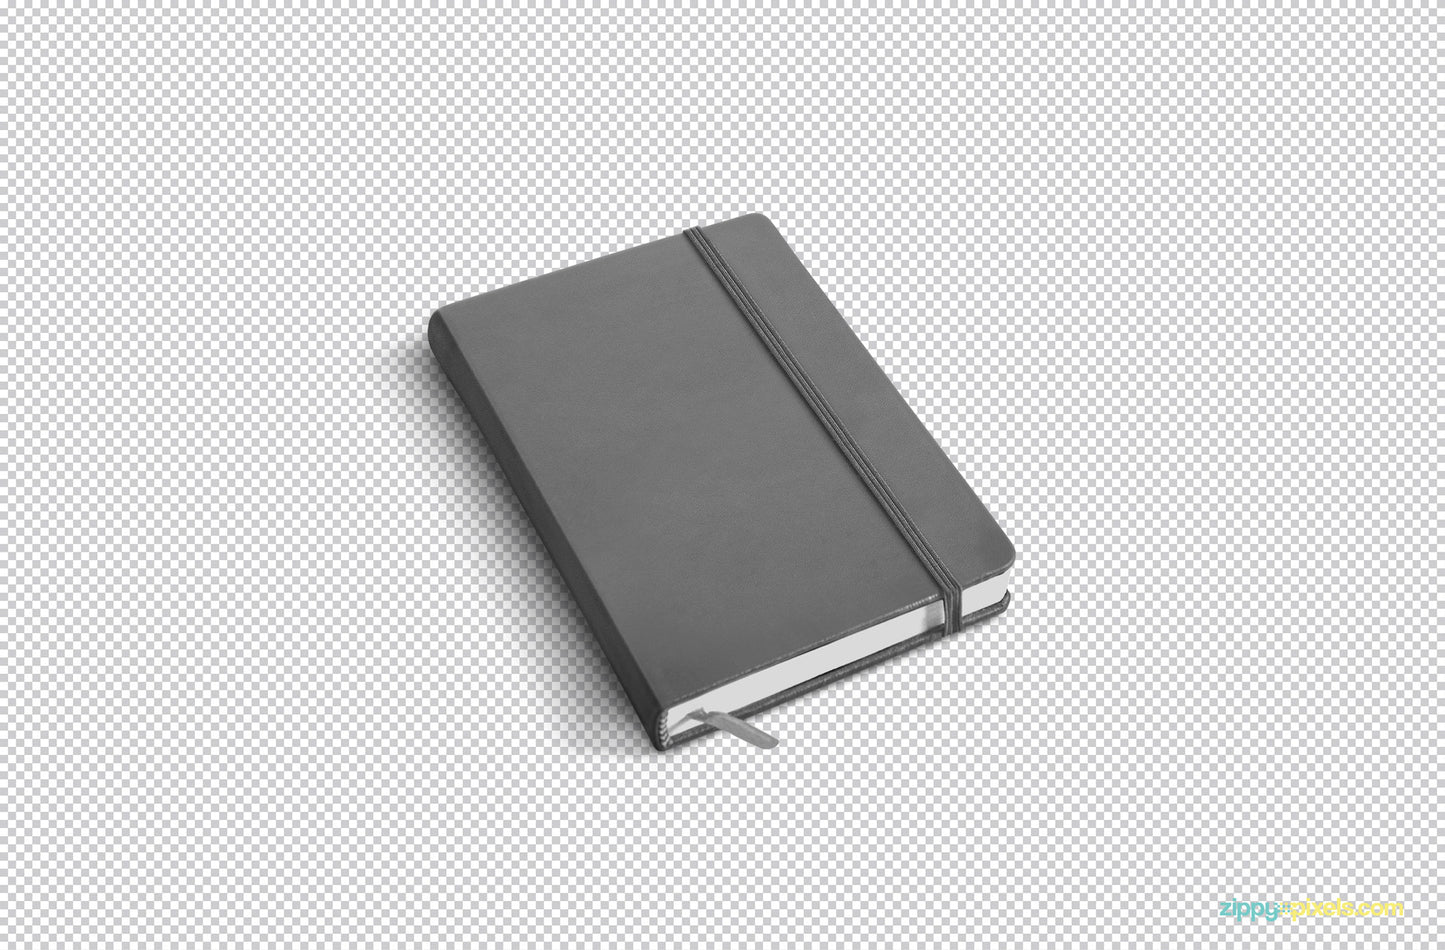 Free Notebook Mockup PSD